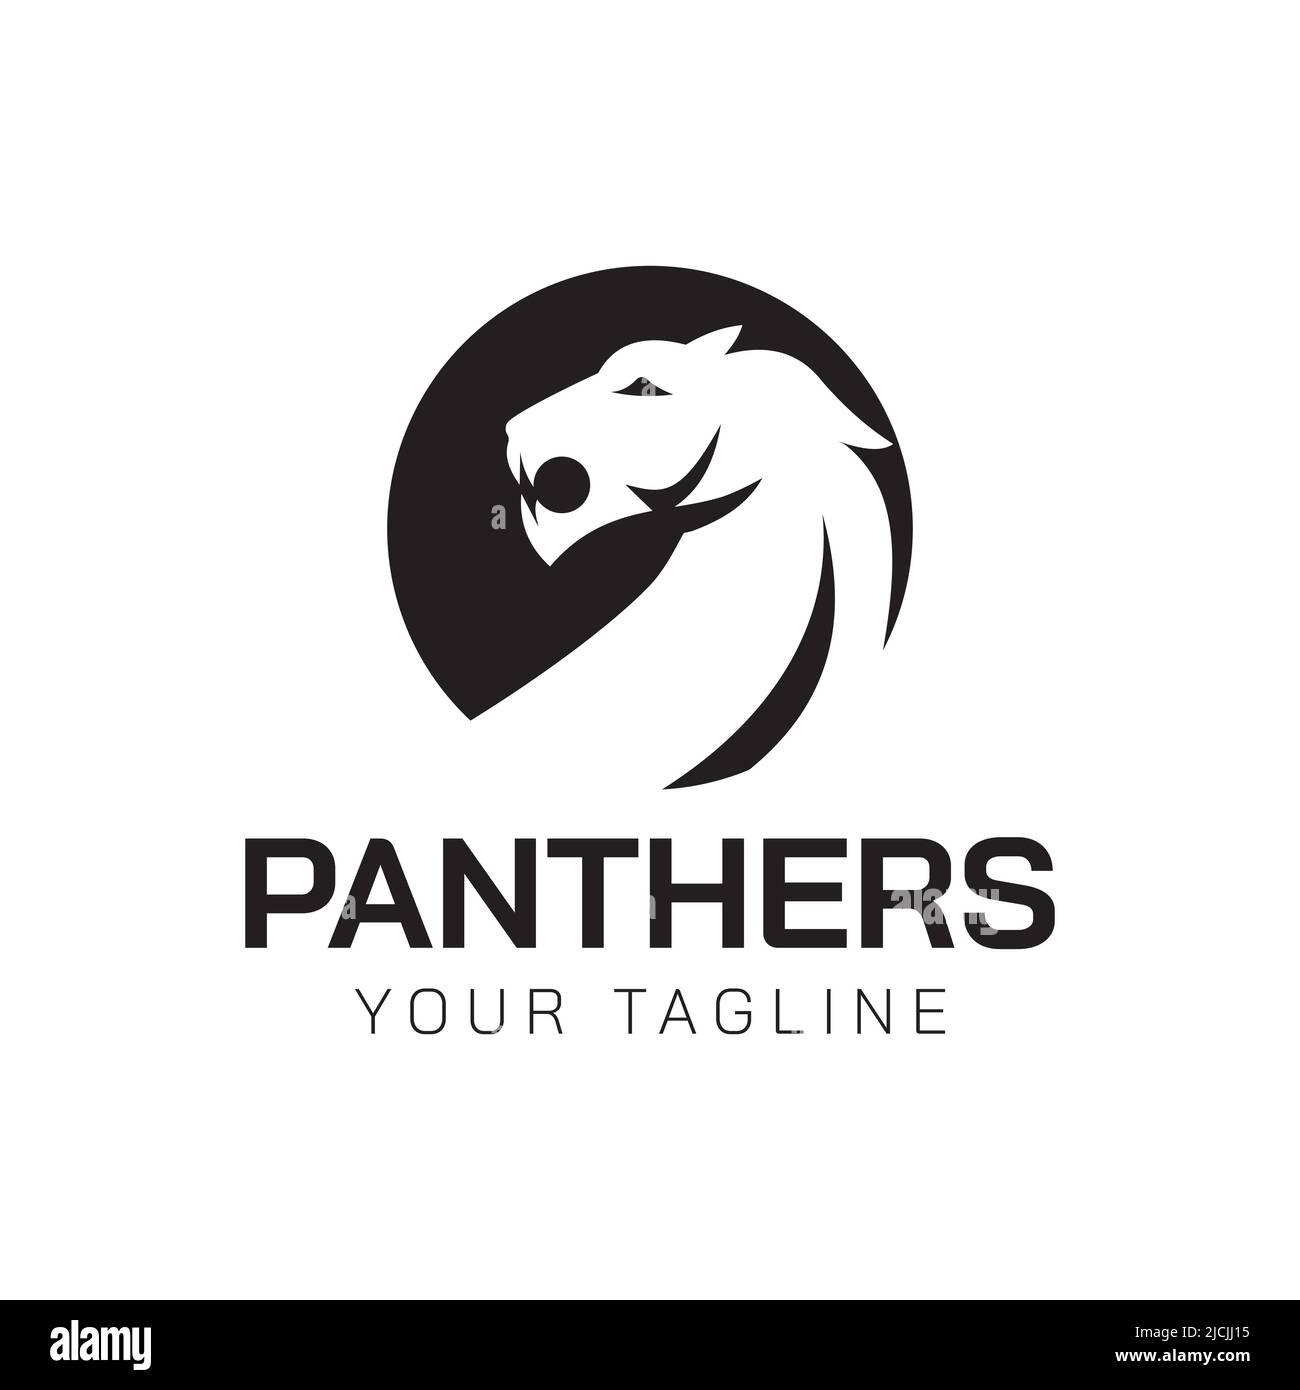 Panther logo design vector negative space template. Creative Animals in circle Logotype concept icon Stock Vector